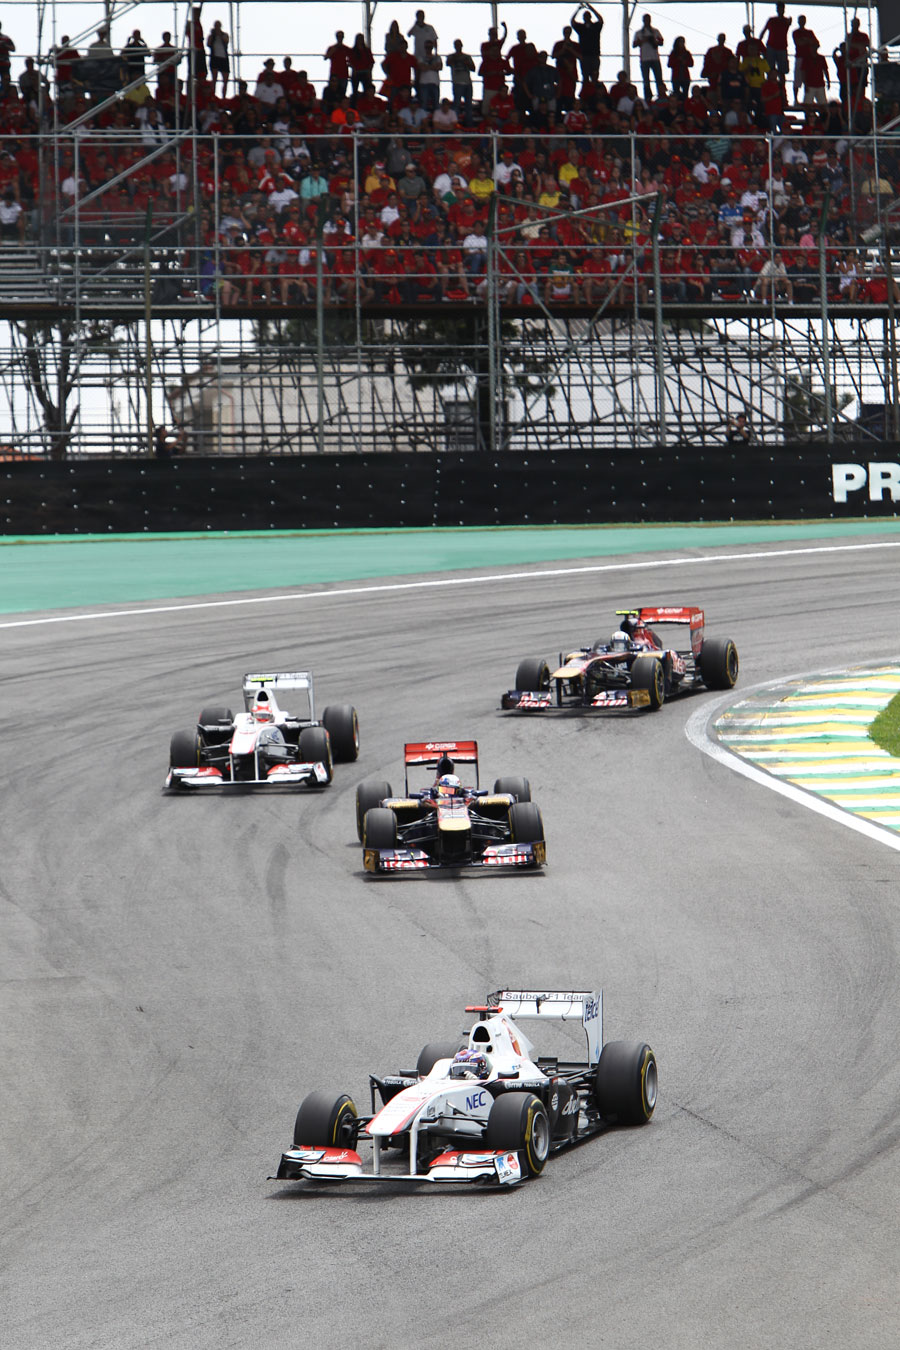 Kamui Kobayashi leads Jaime Alguersuari, Sergio Perez and Sebastien Buemi through the Senna S